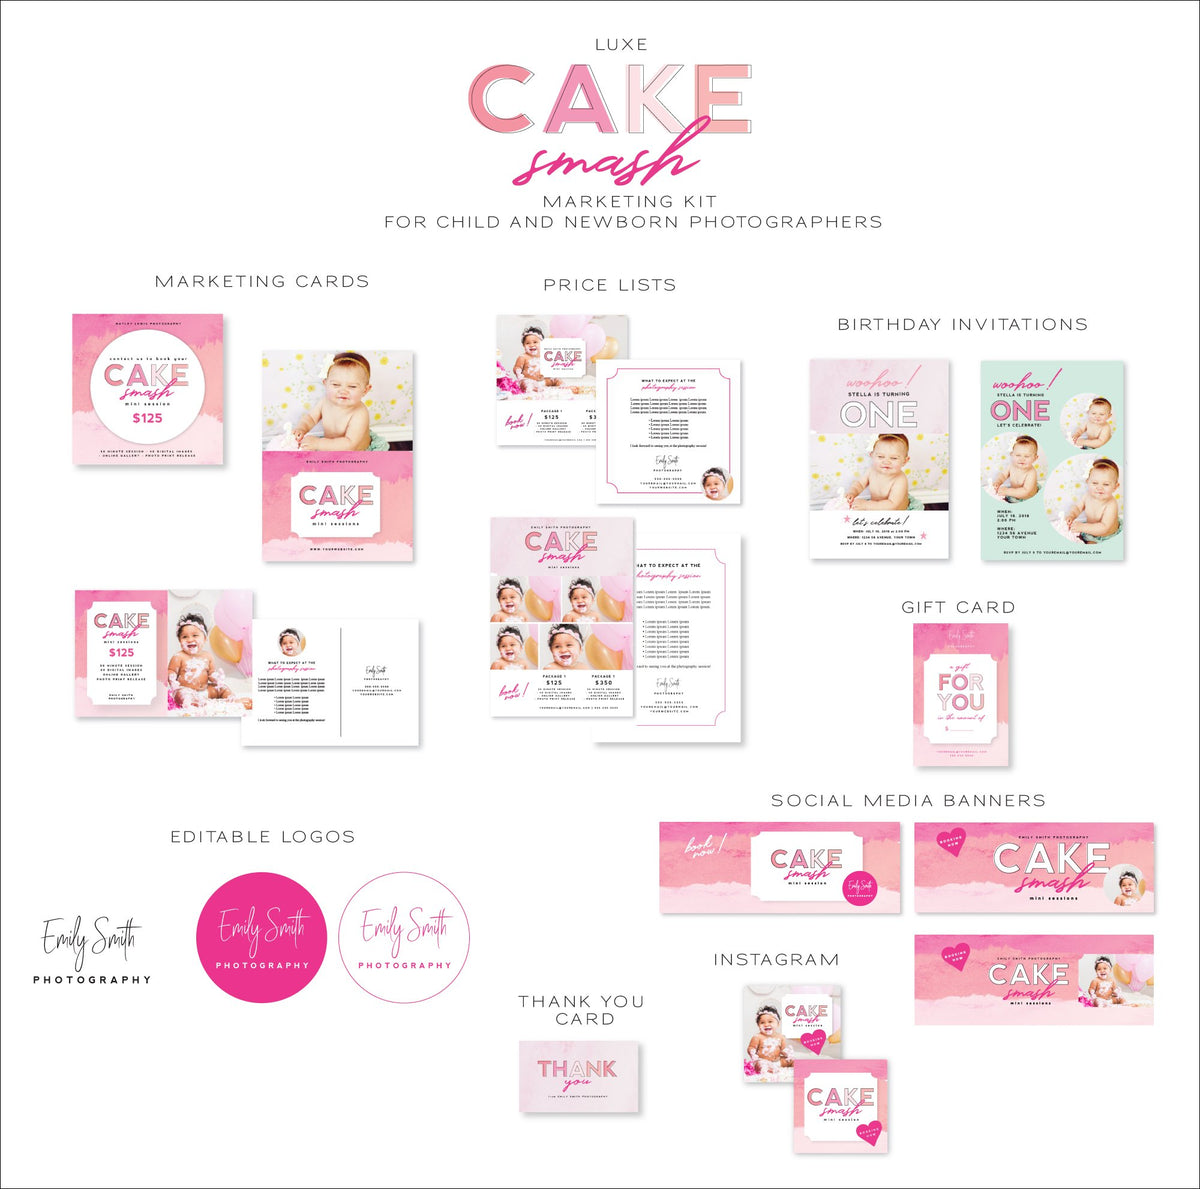 Cake Smash Marketing Kit for Child &amp; Newborn Photographers